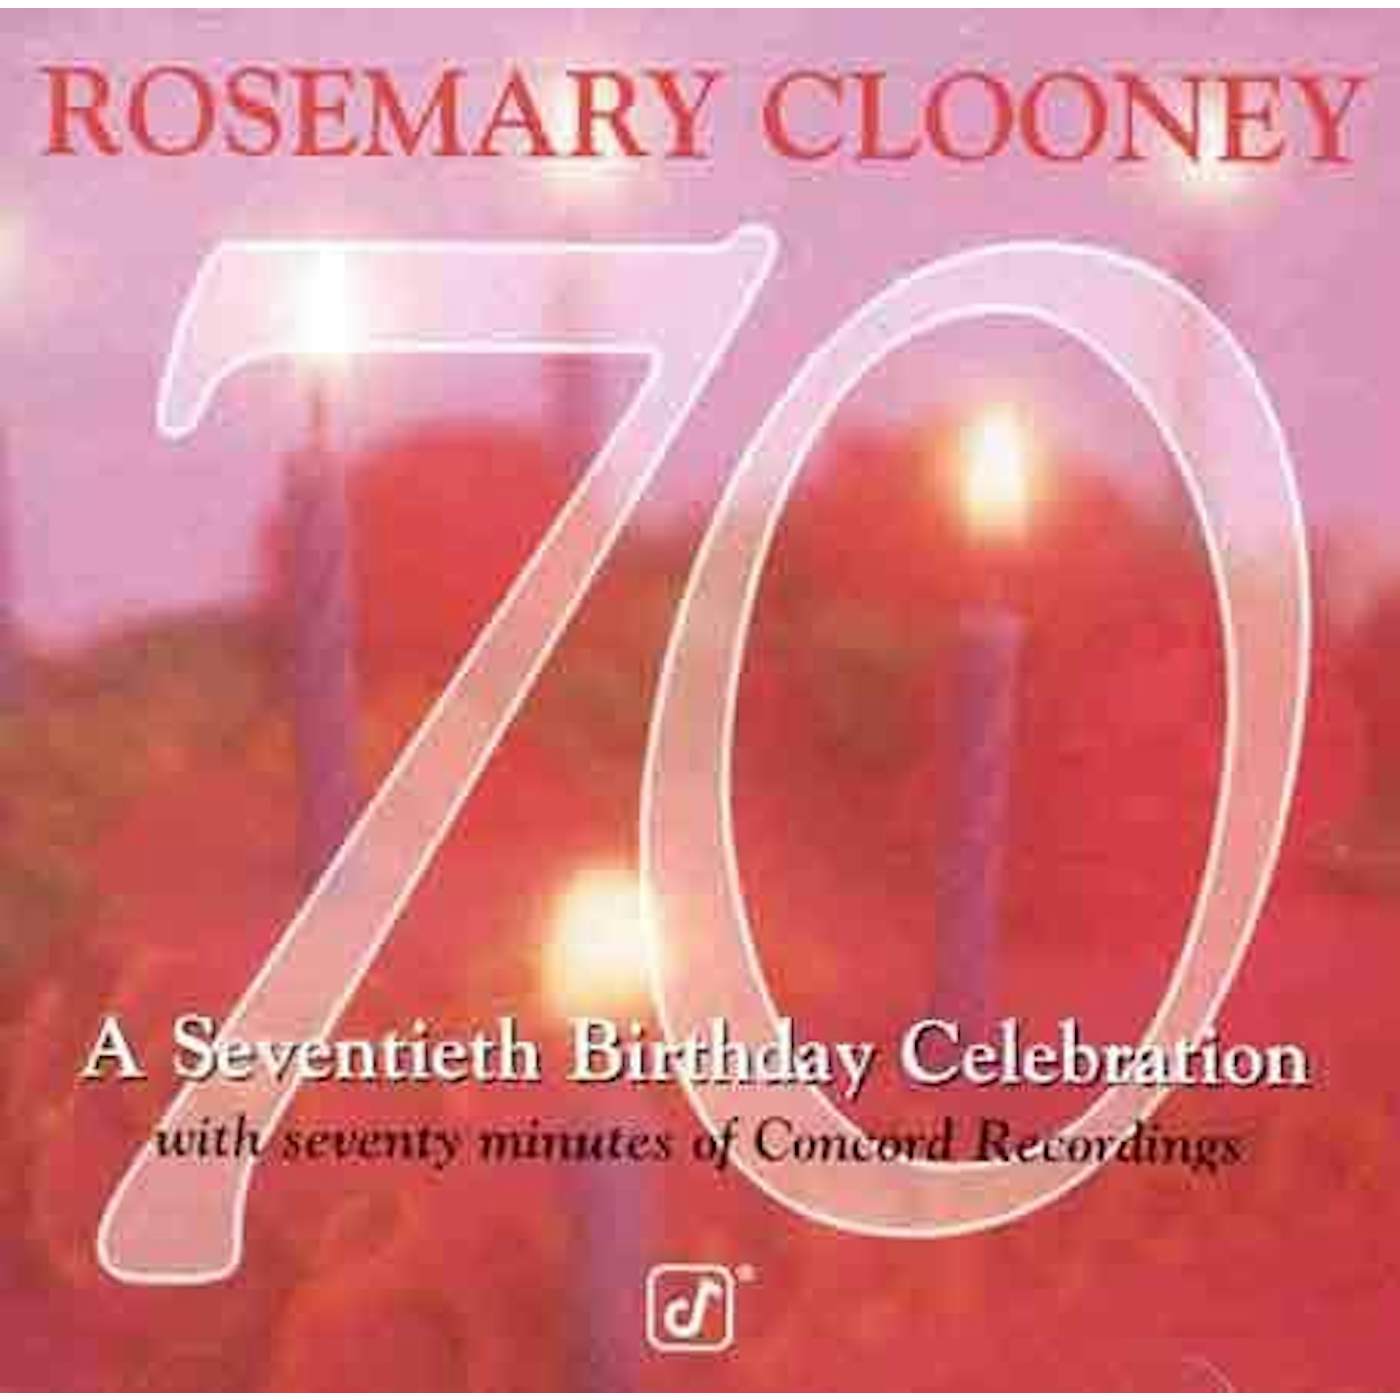 Rosemary Clooney 70: SEVENTIETH BIRTHDAY CELEBRATION CD